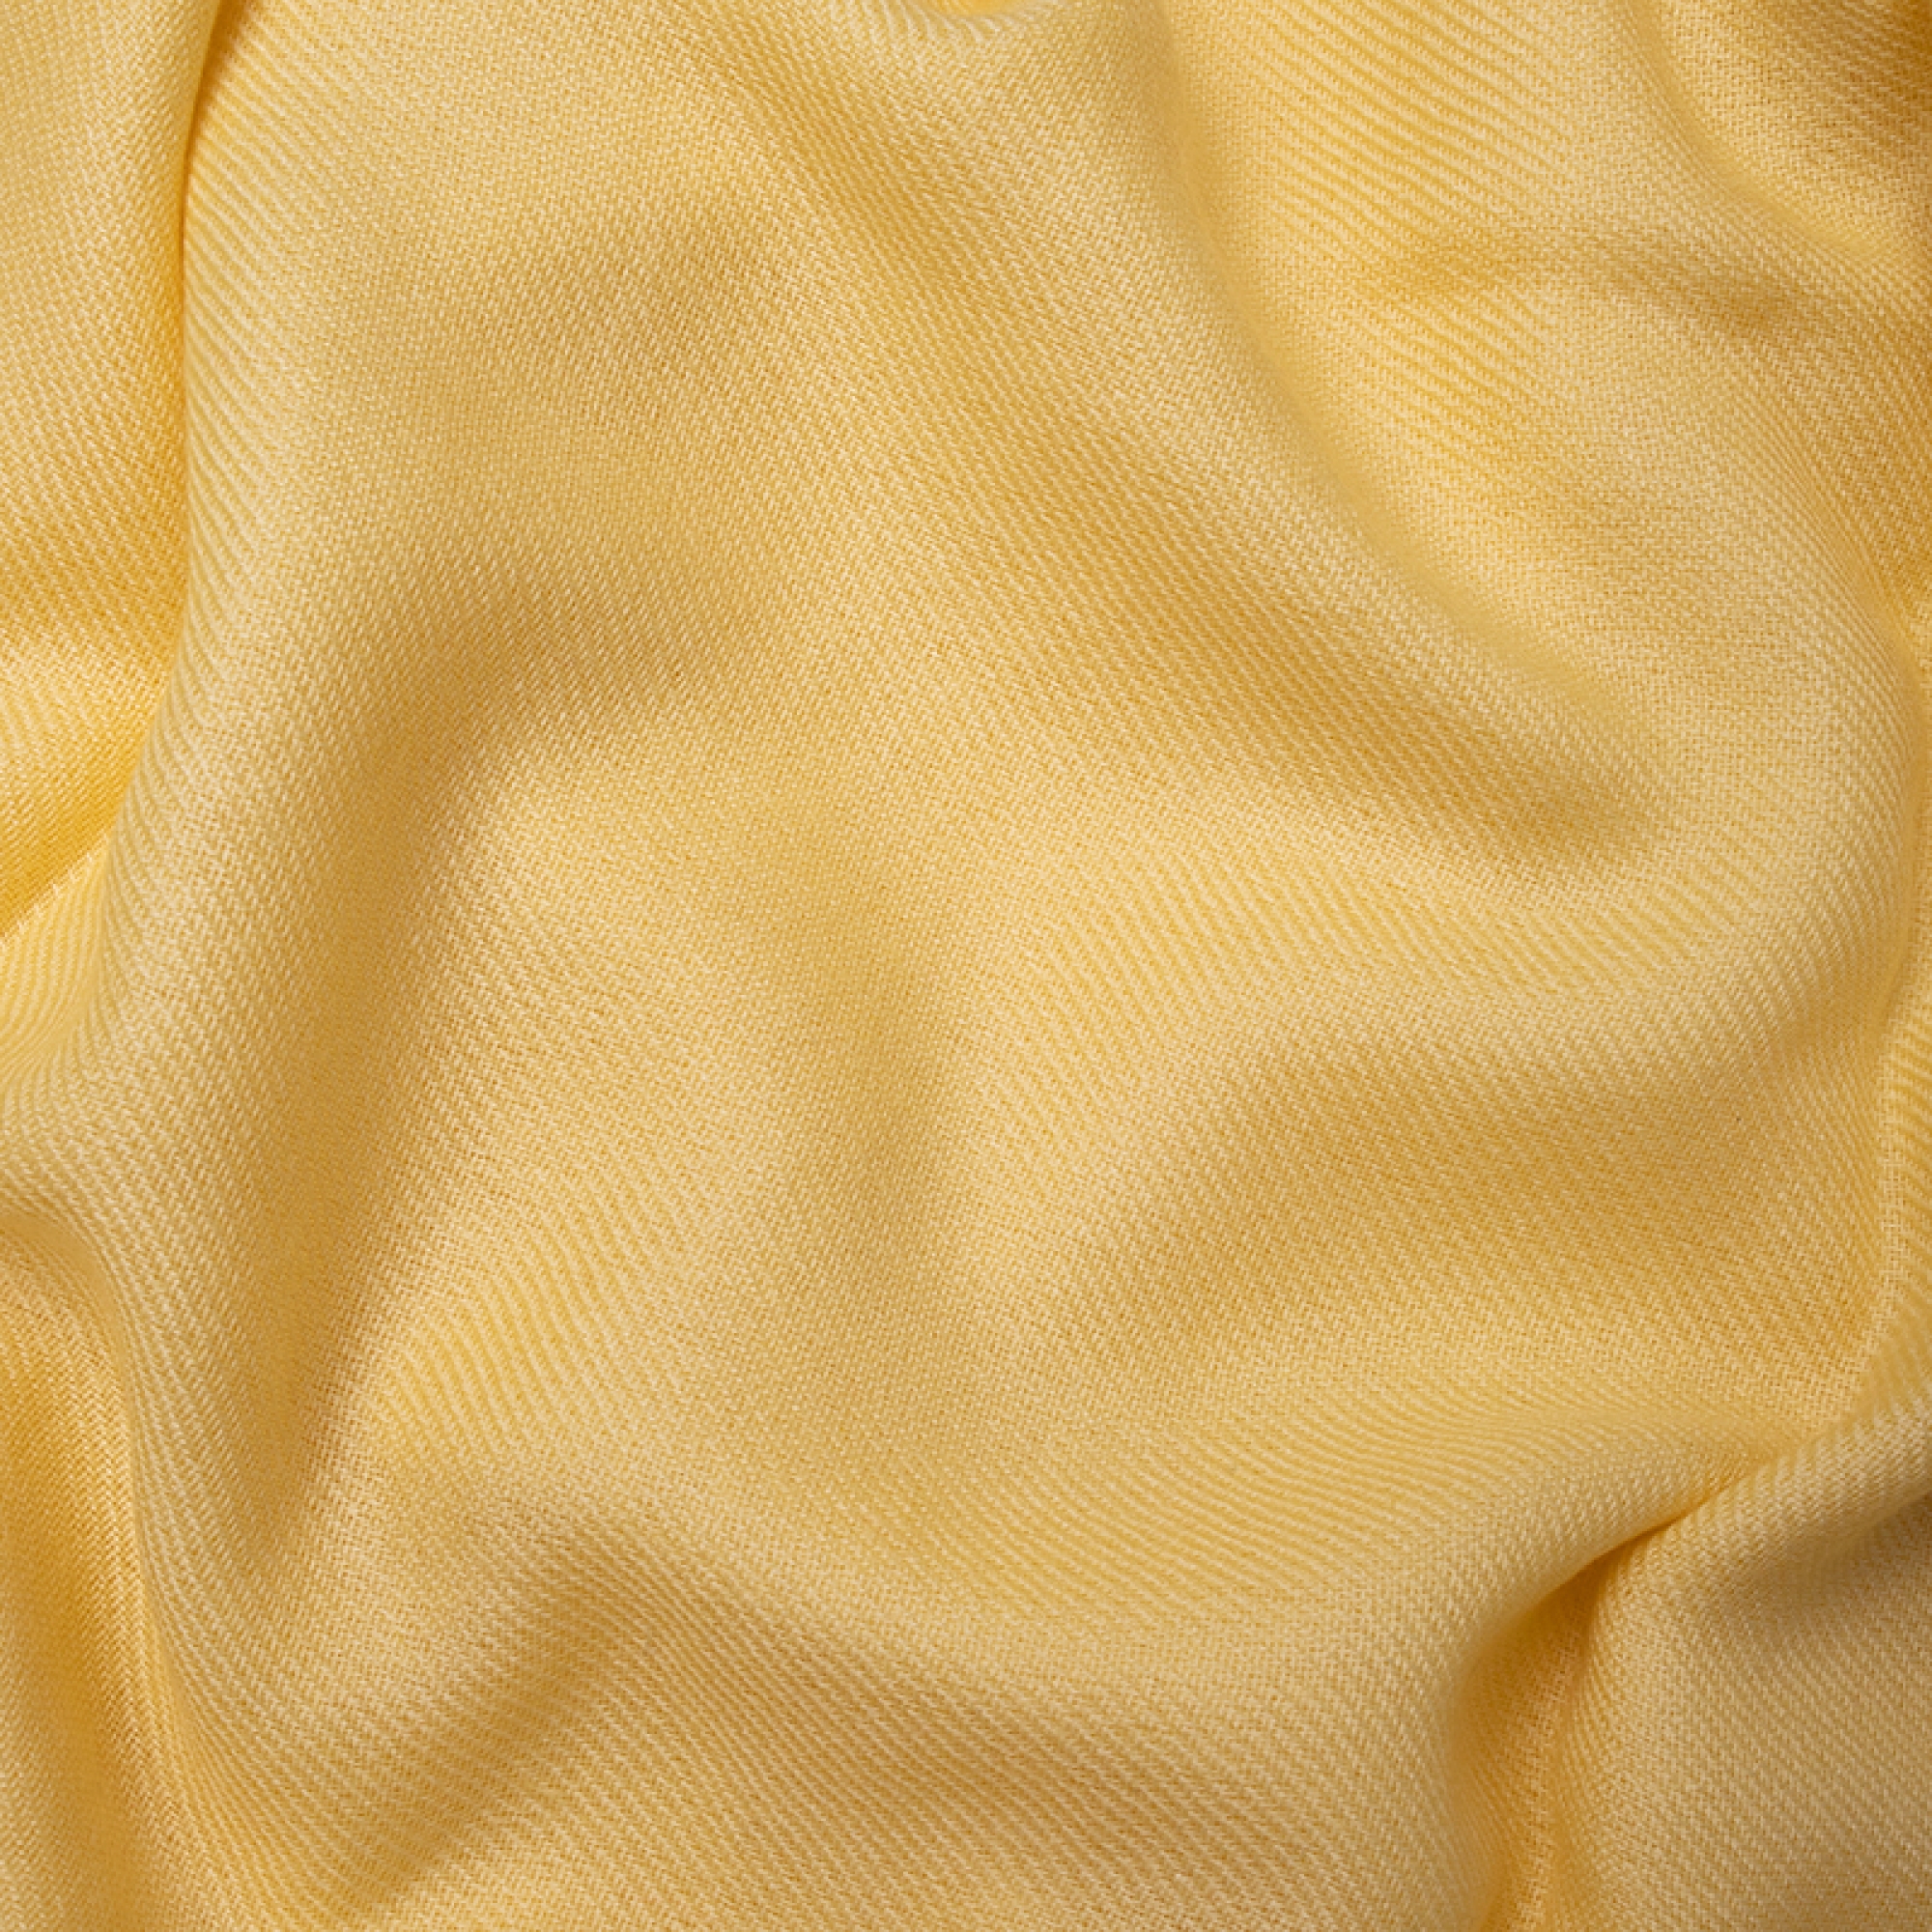 Cashmere accessories blanket toodoo plain xl 240 x 260 mellow yellow 240 x 260 cm